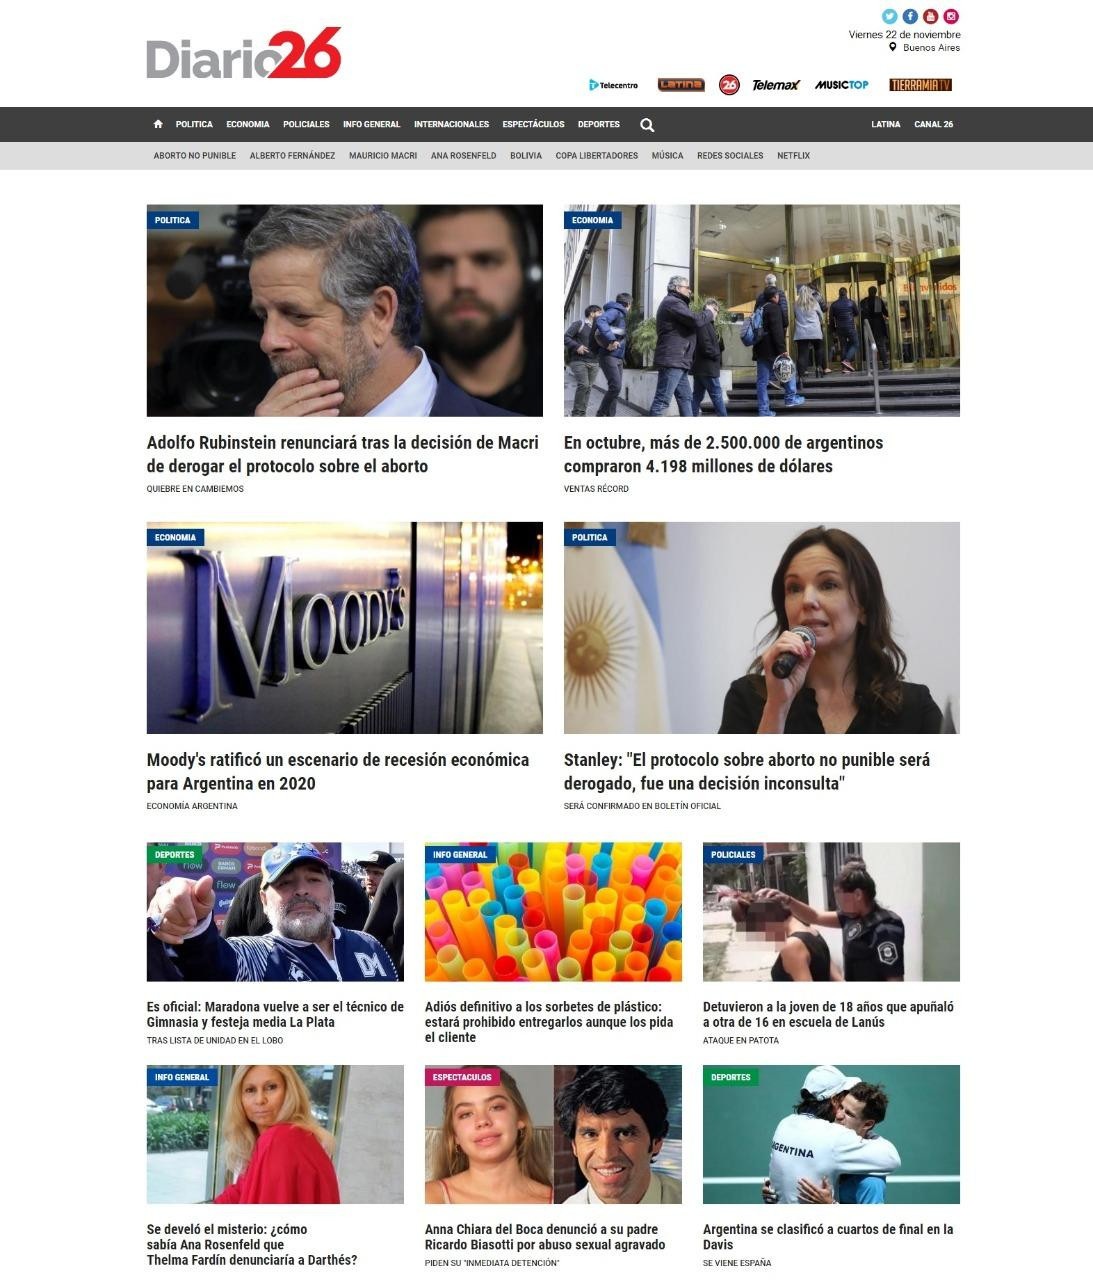 Tapas de diarios, Diario 26 viernes 22-11-19